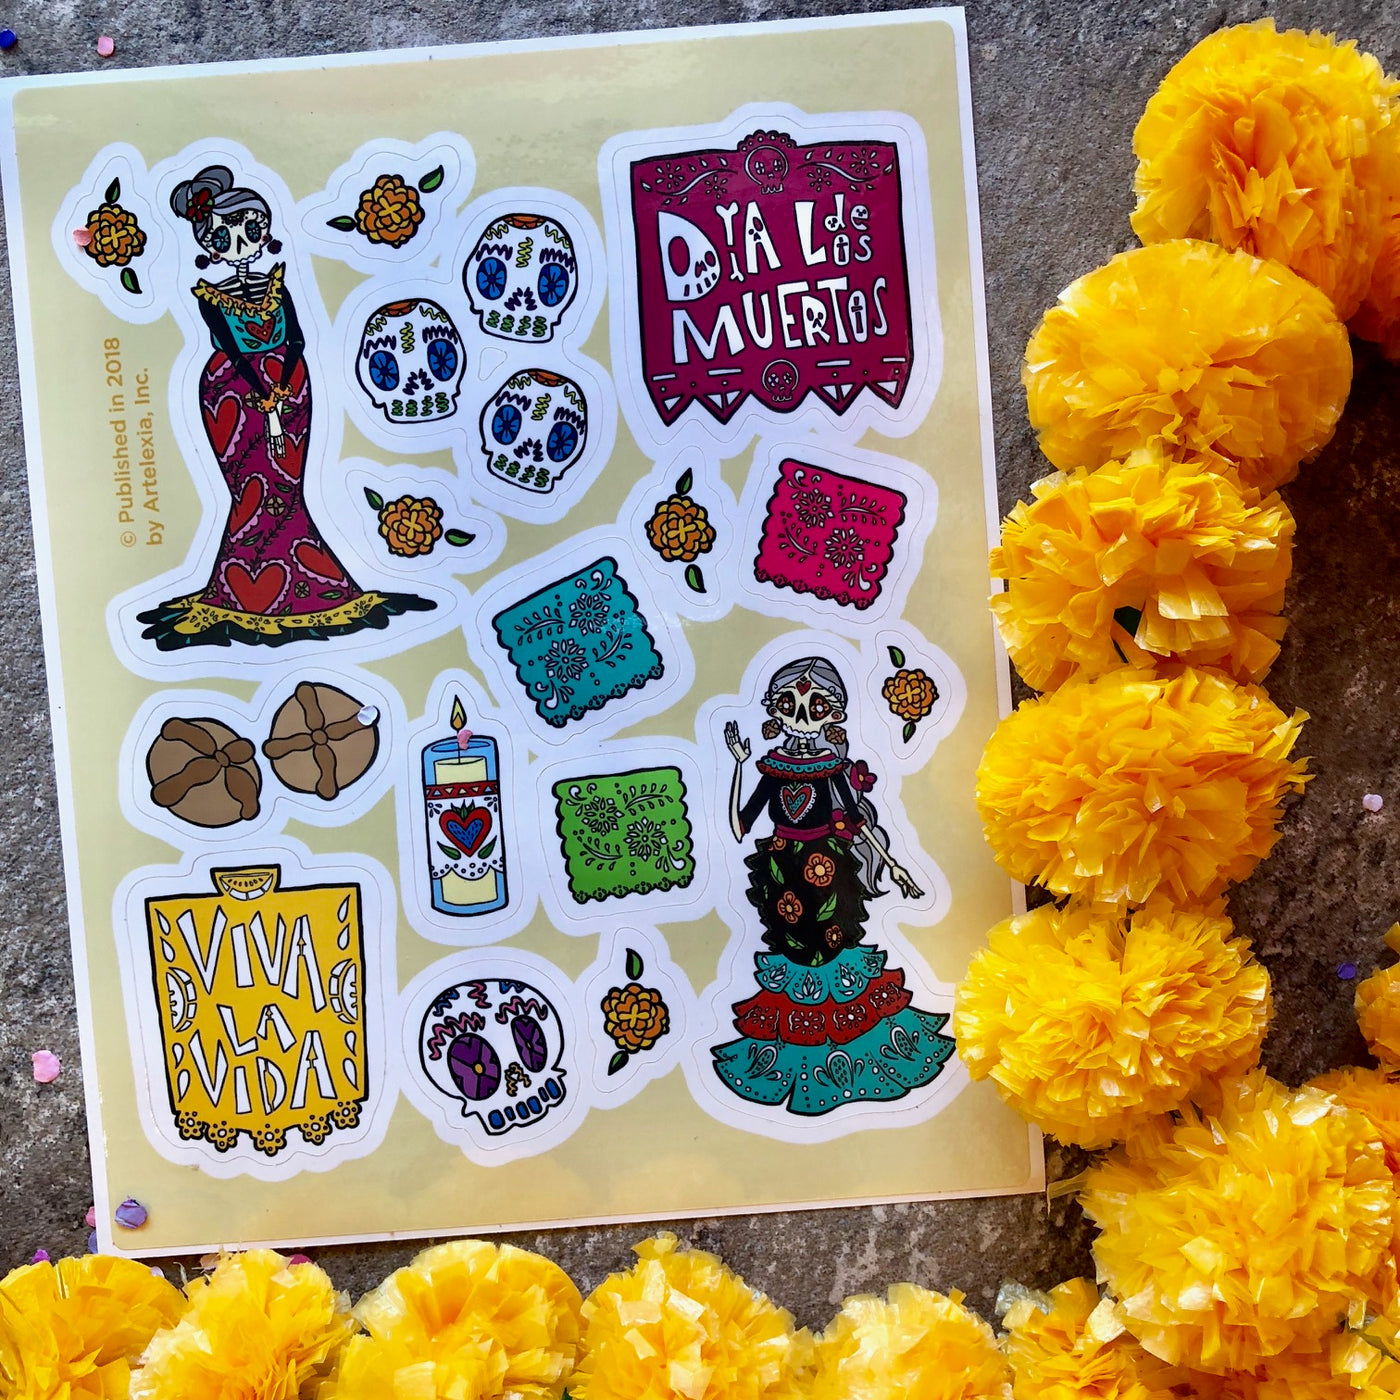 Day of the Dead vinyl sticker sheet with calaveras, paper picador, pan de muerto and sugar skull stickers.